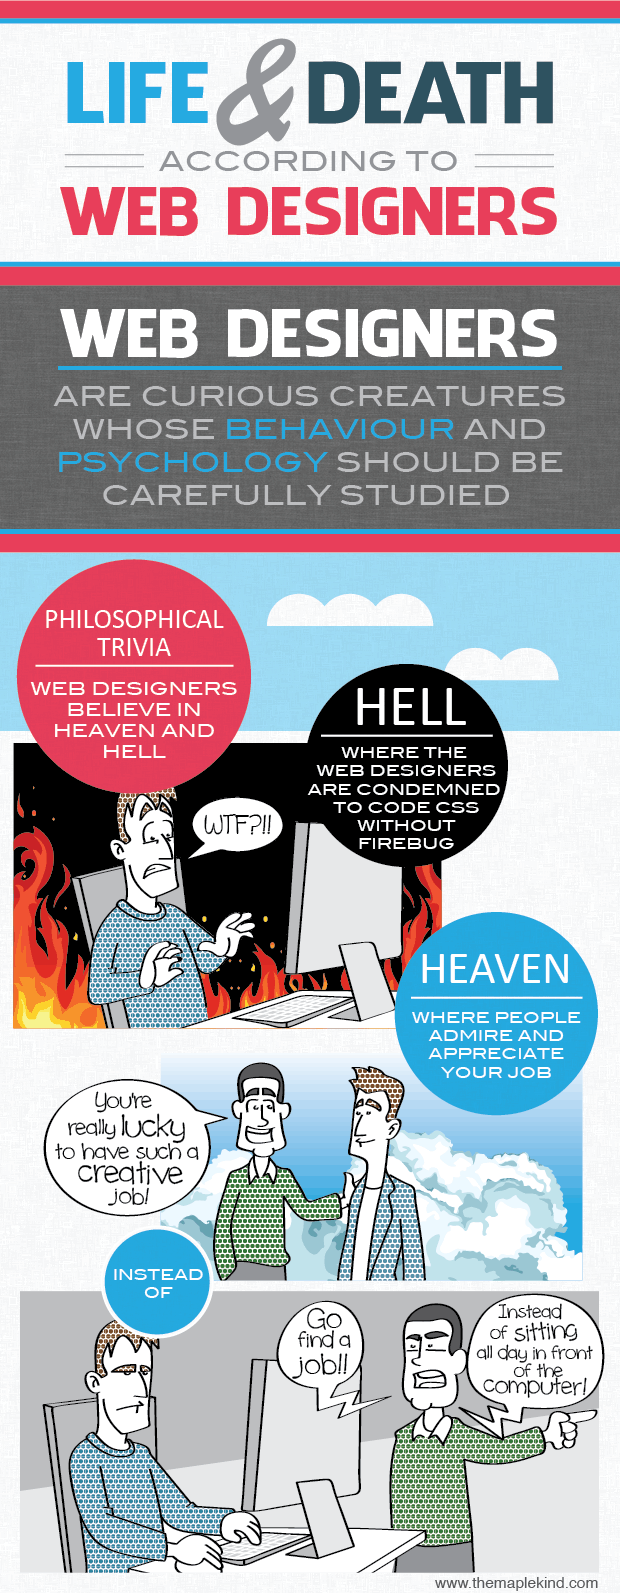 Life & death according to web designers